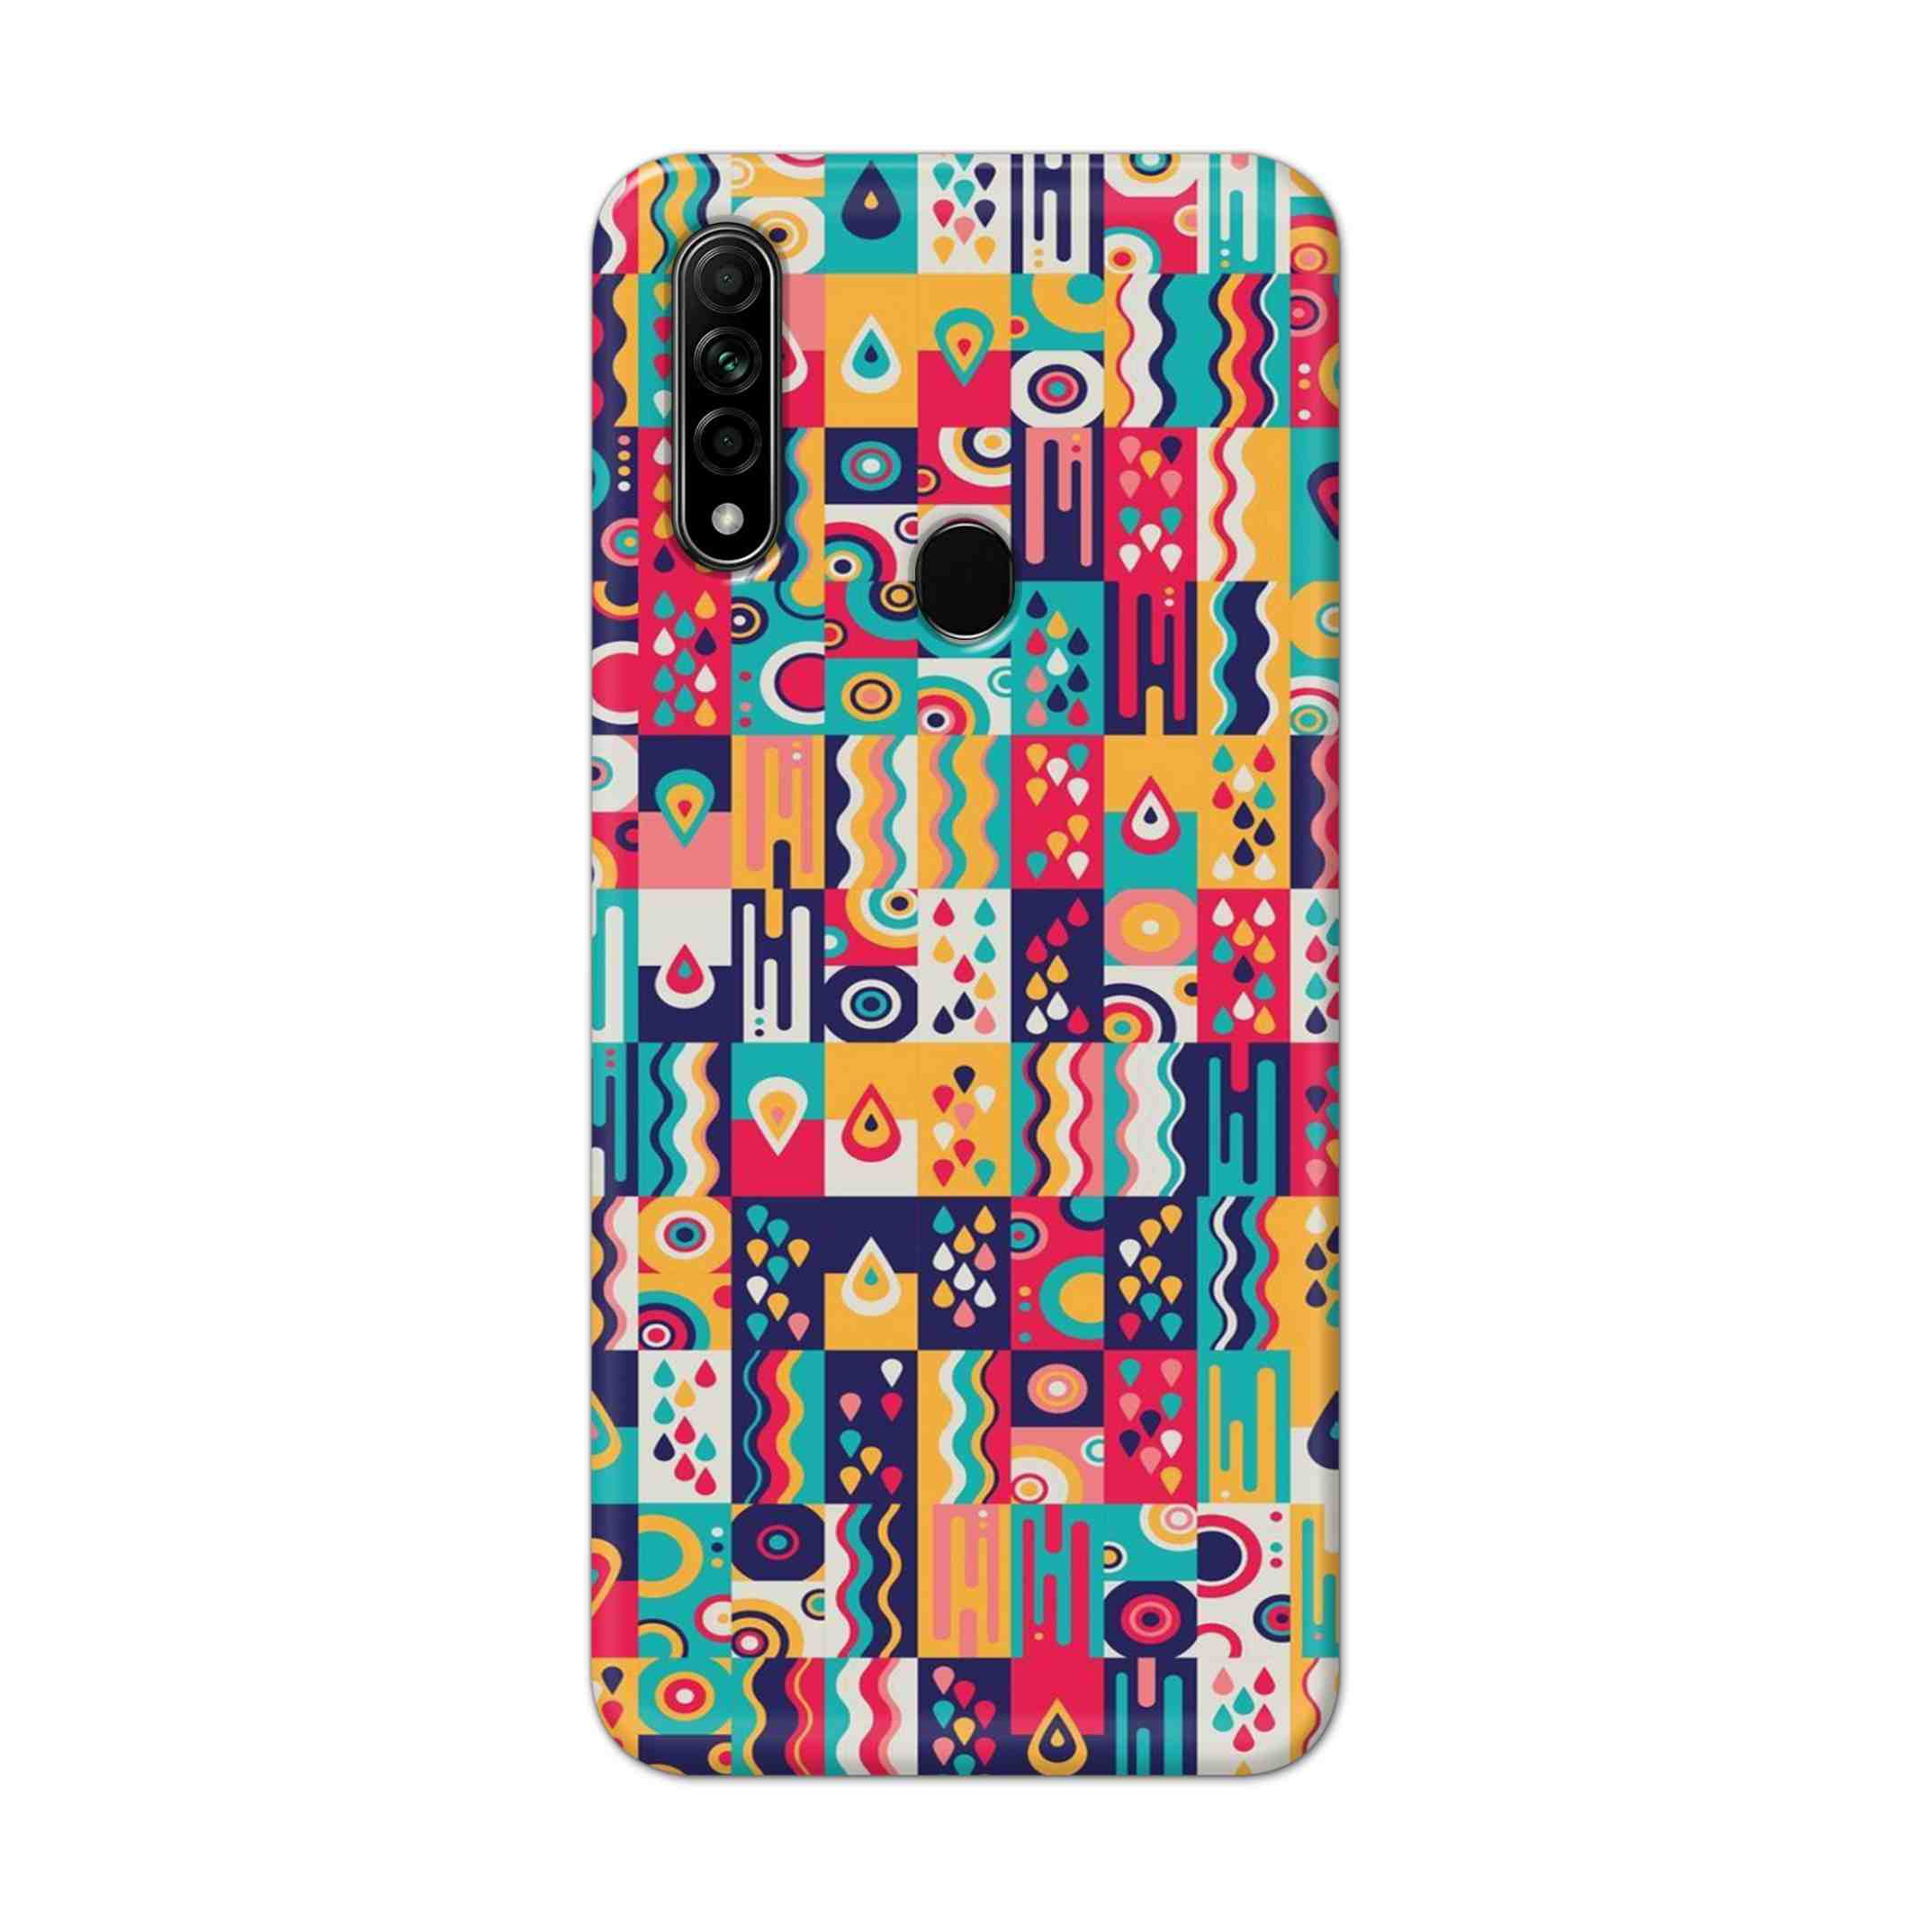 Buy Art Hard Back Mobile Phone Case Cover For Oppo A31 (2020) Online